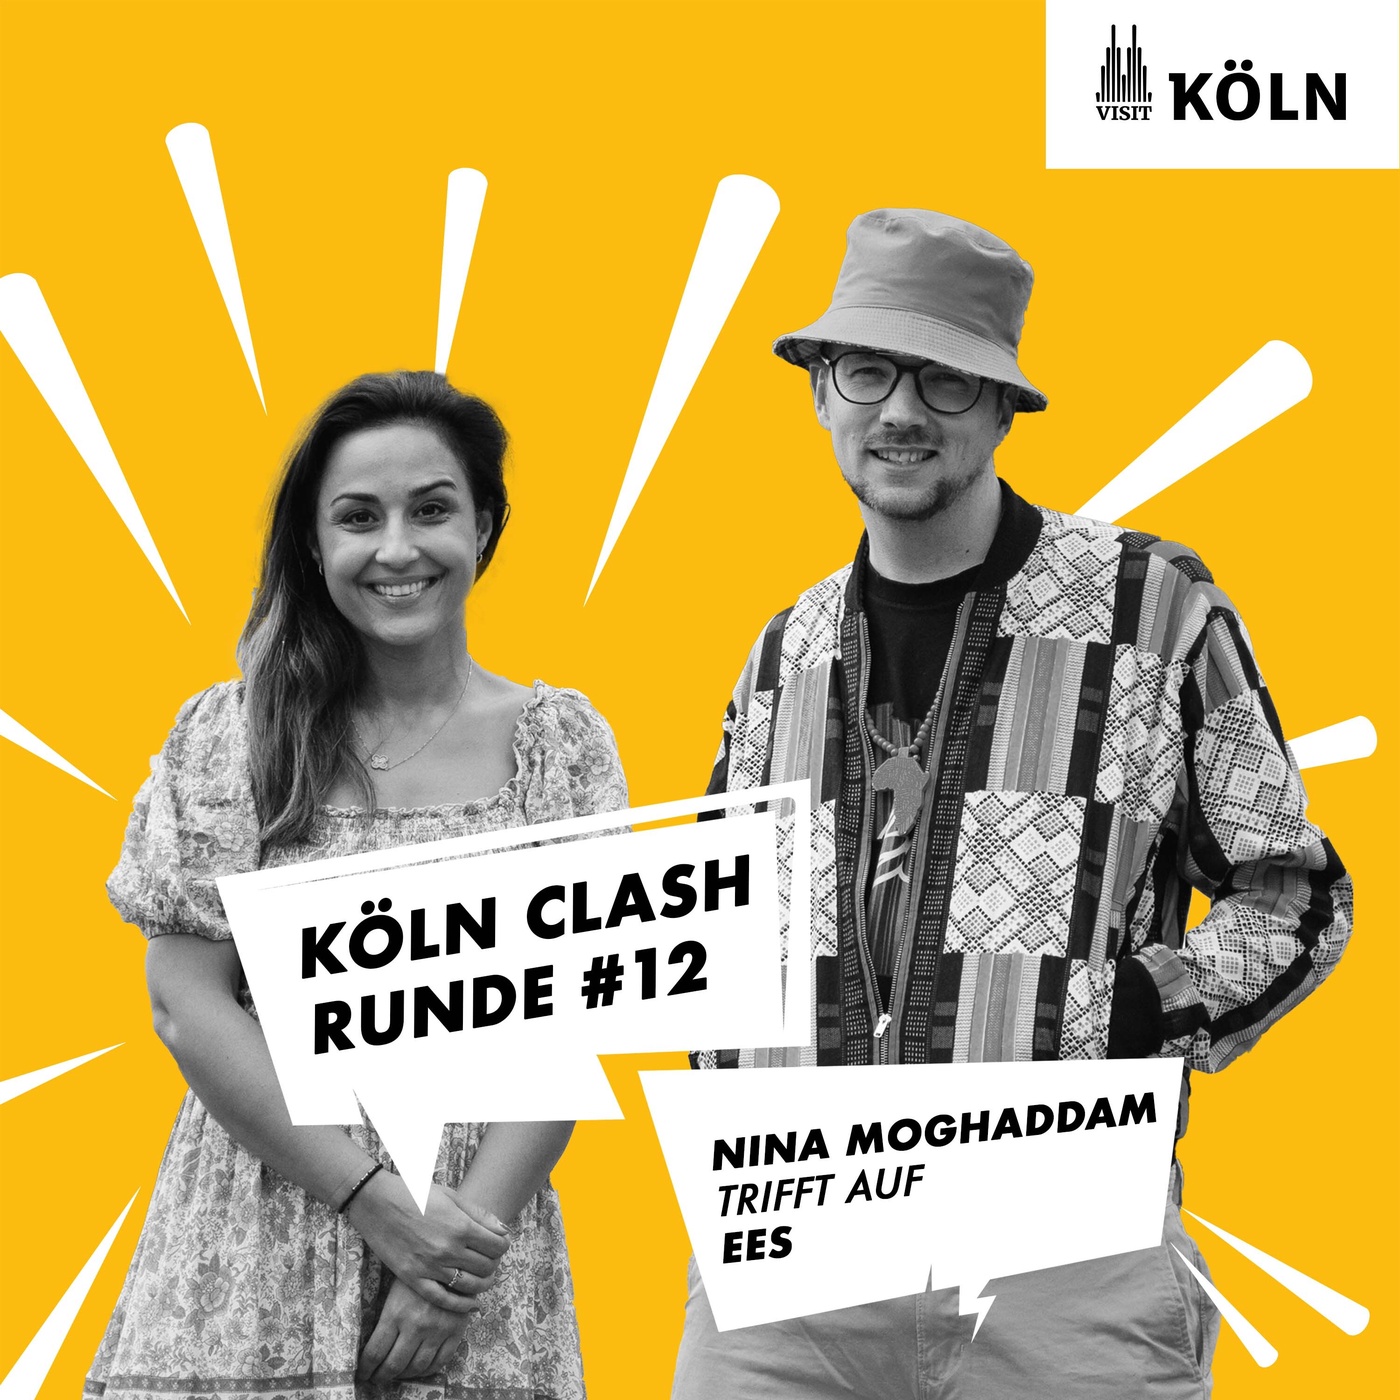 Köln Clash, Runde #12 - Nina Moghaddam trifft auf EES